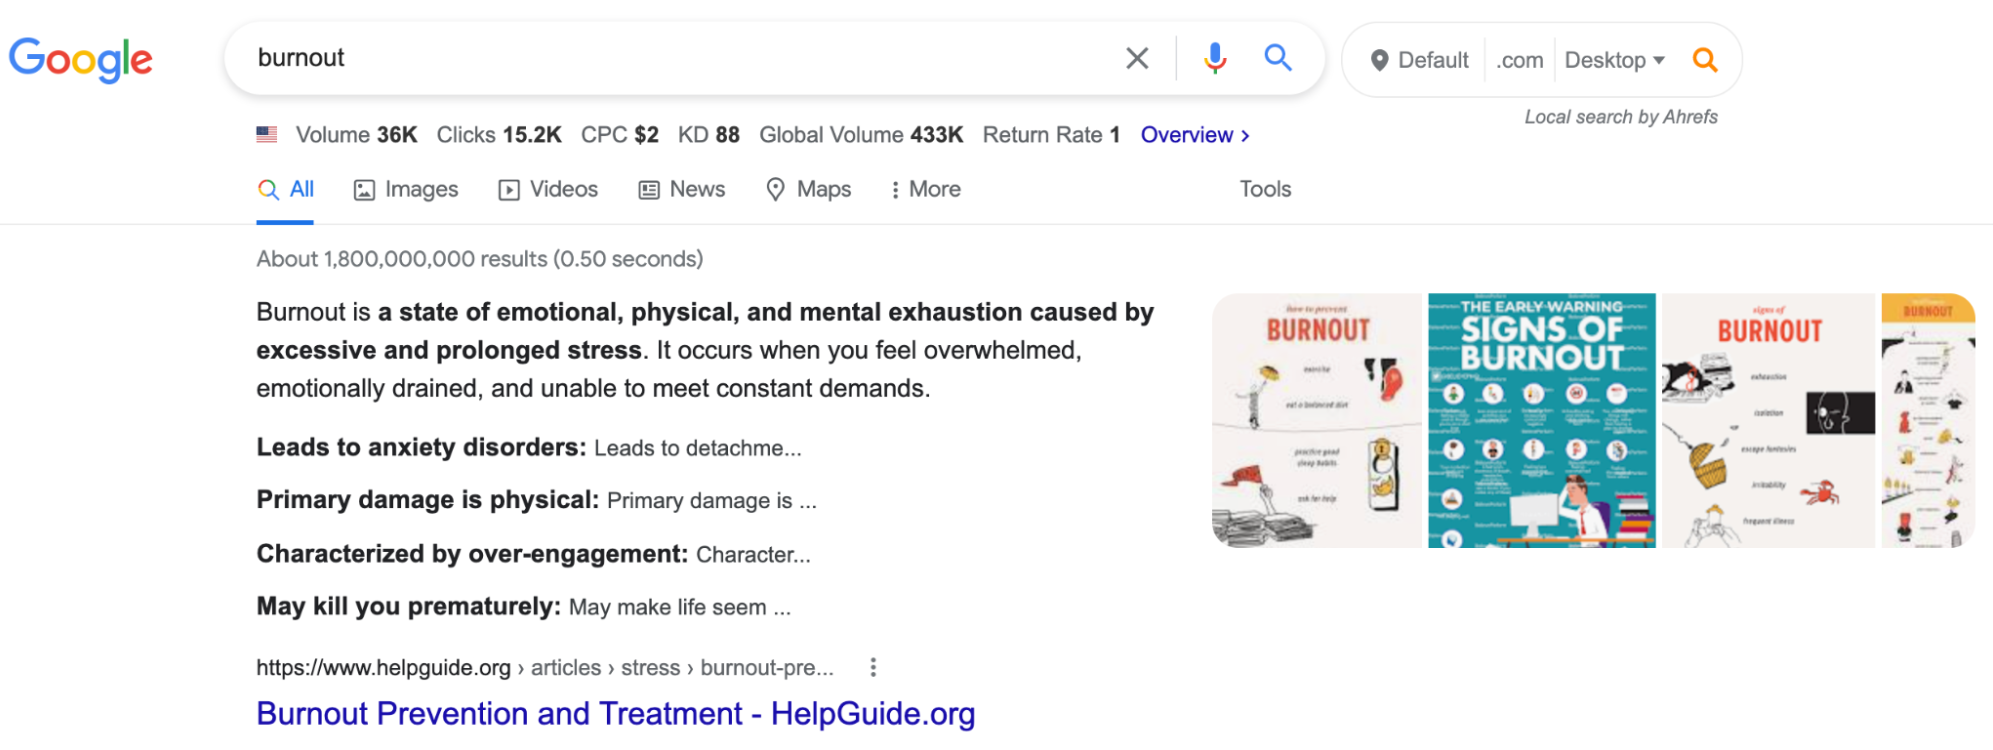 Google SERP for 'burnout'